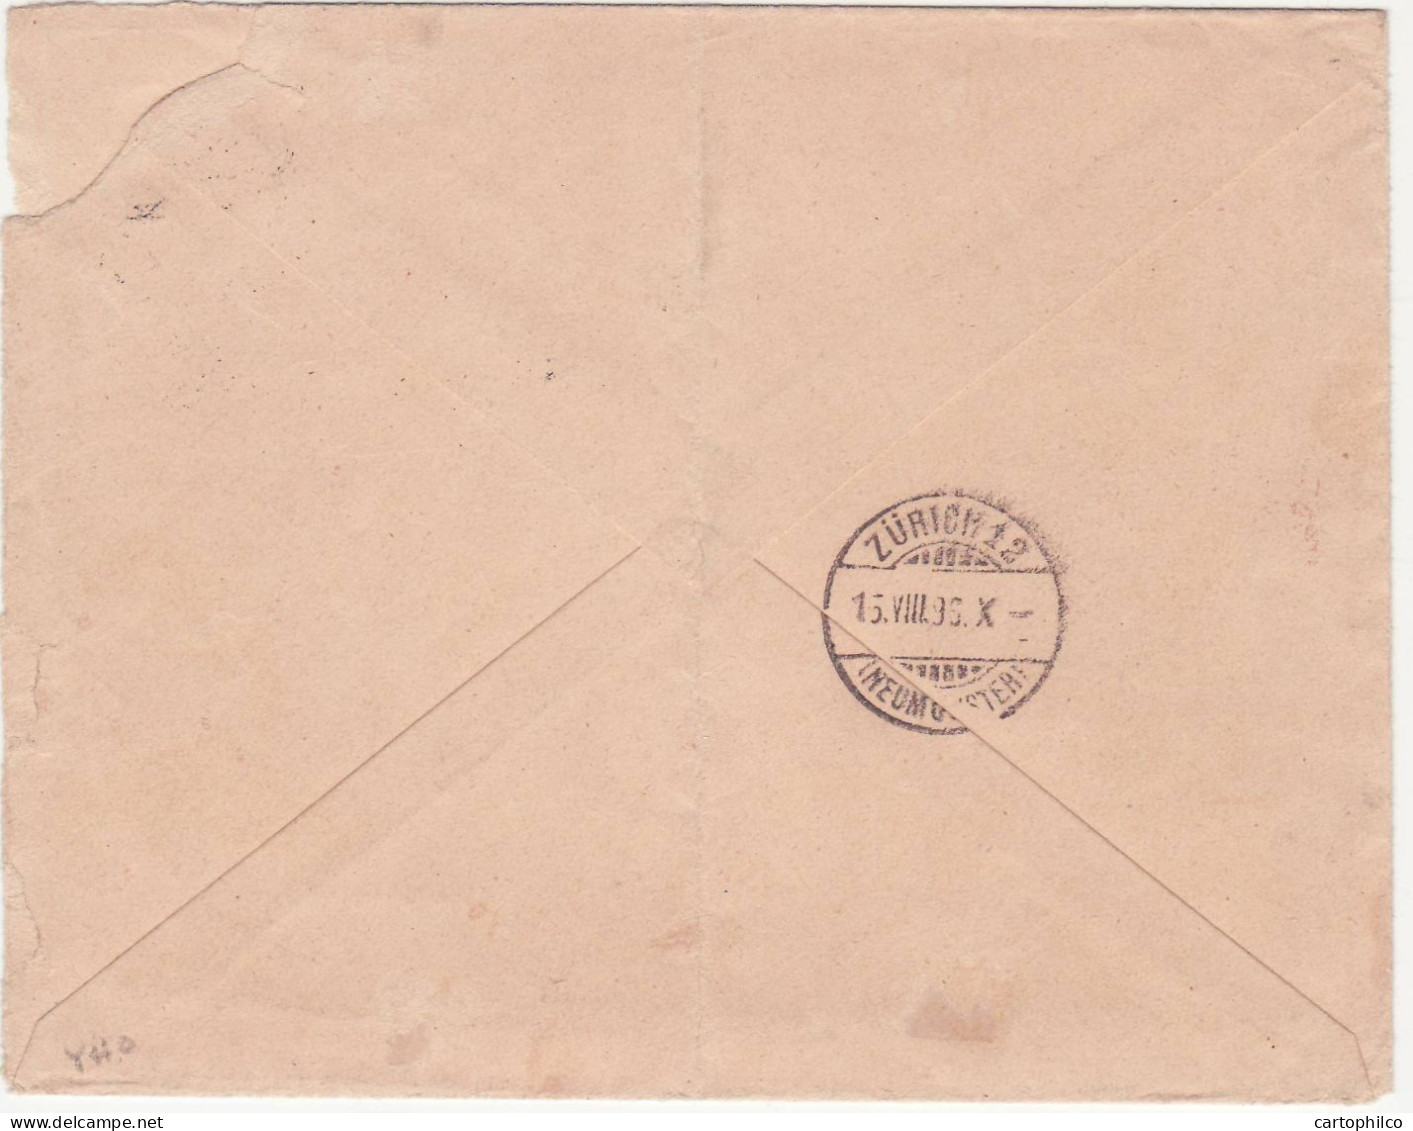 Gambia Registered Cover 2 1/2d Bathurst 1896 For Zurich Switzerland - Gambie (...-1964)